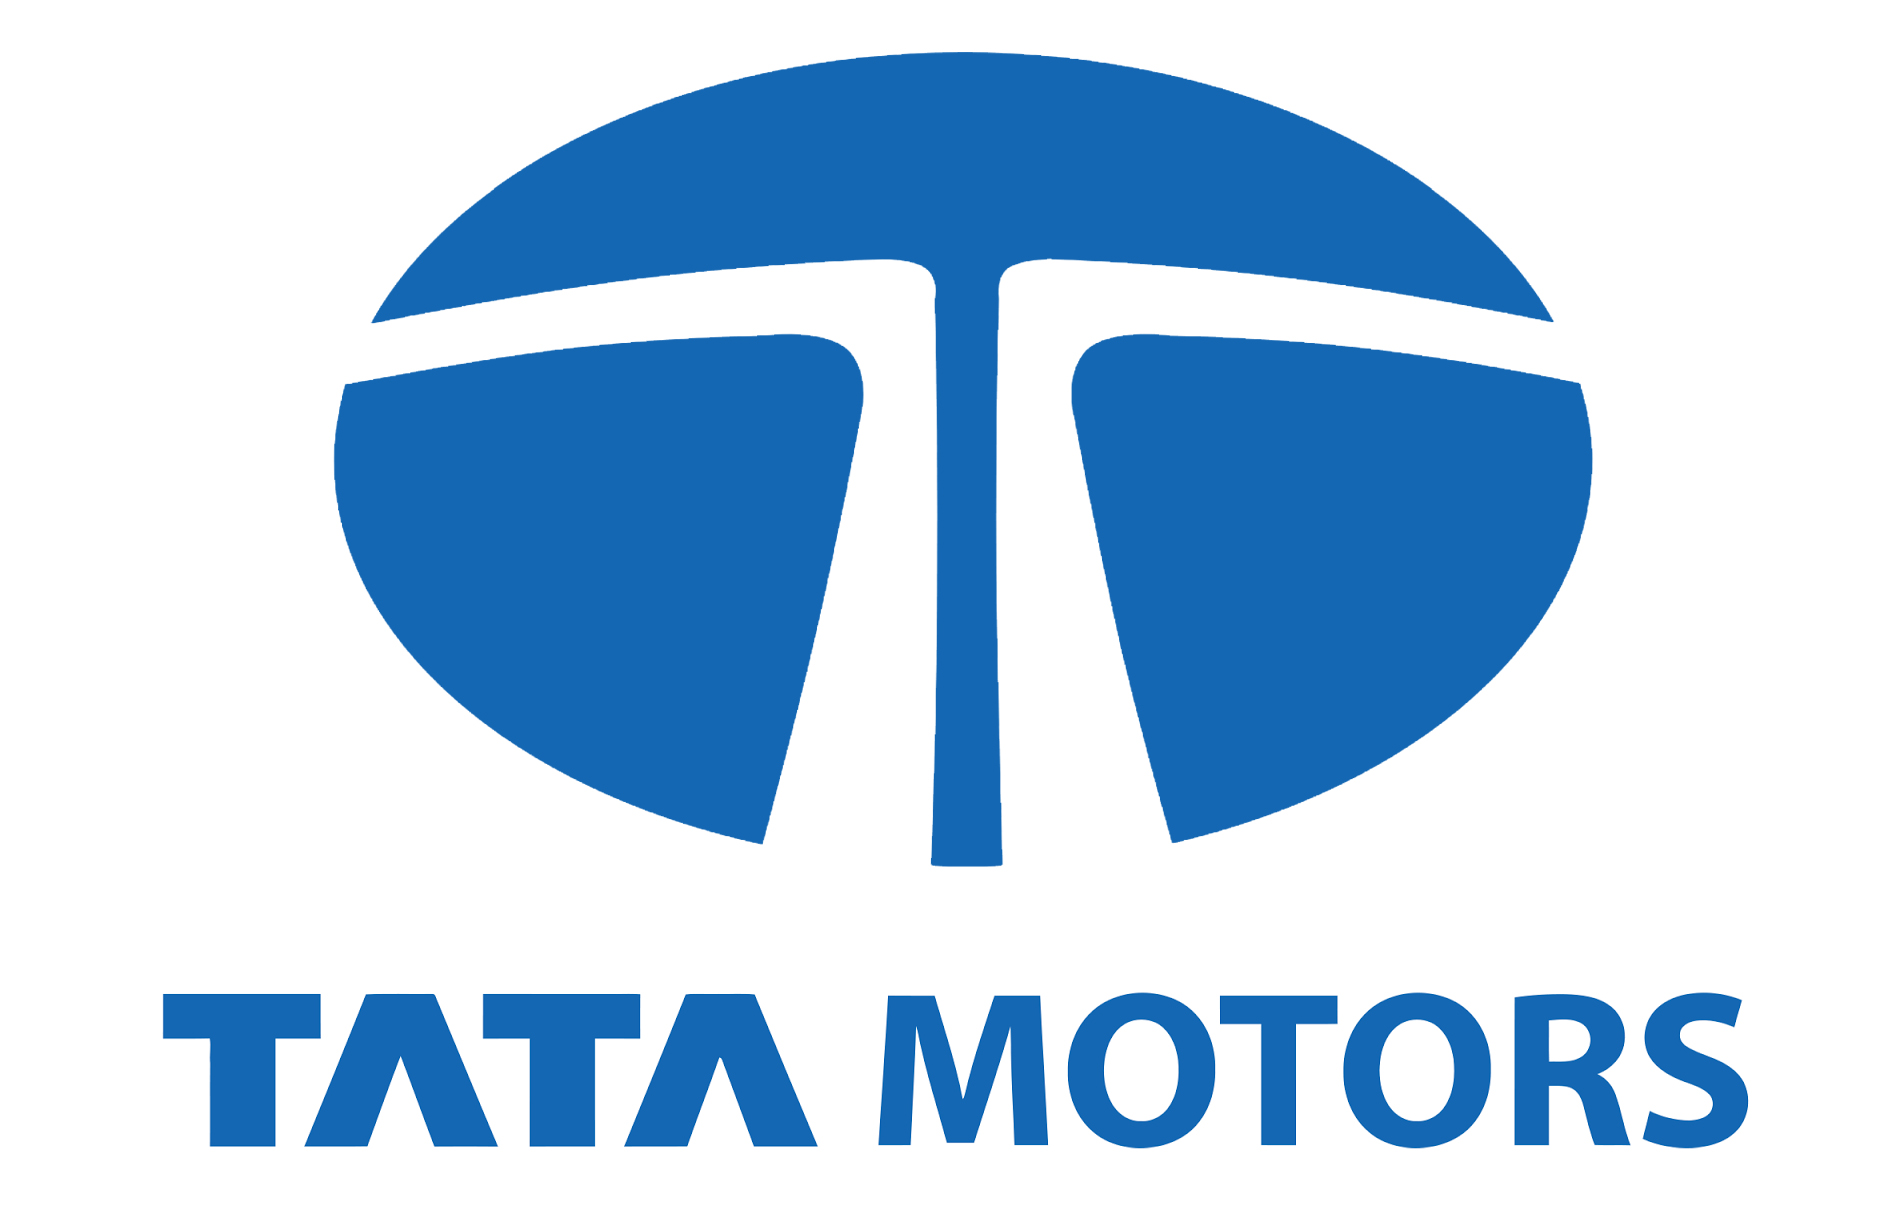 Tata Motors Cars Showroom - Standard|Show Room|Automotive